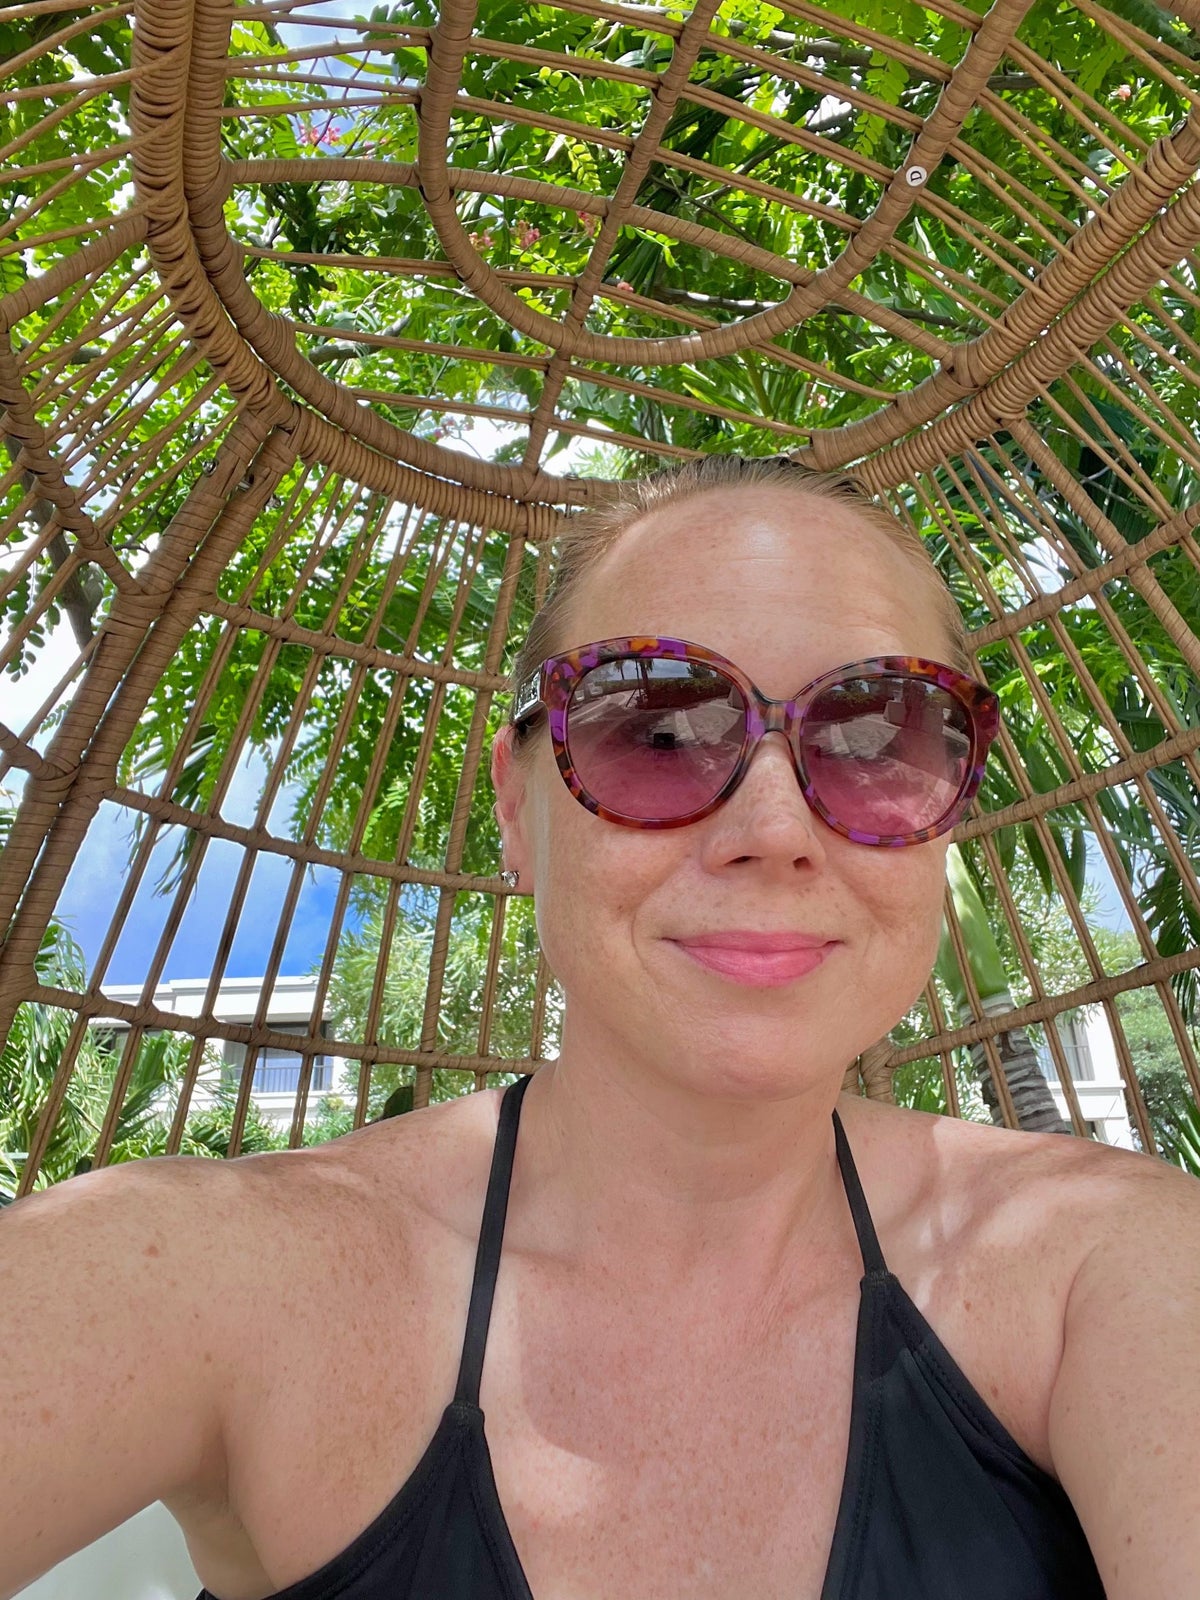 In the Curacao Marriott Beach Resorts gardens